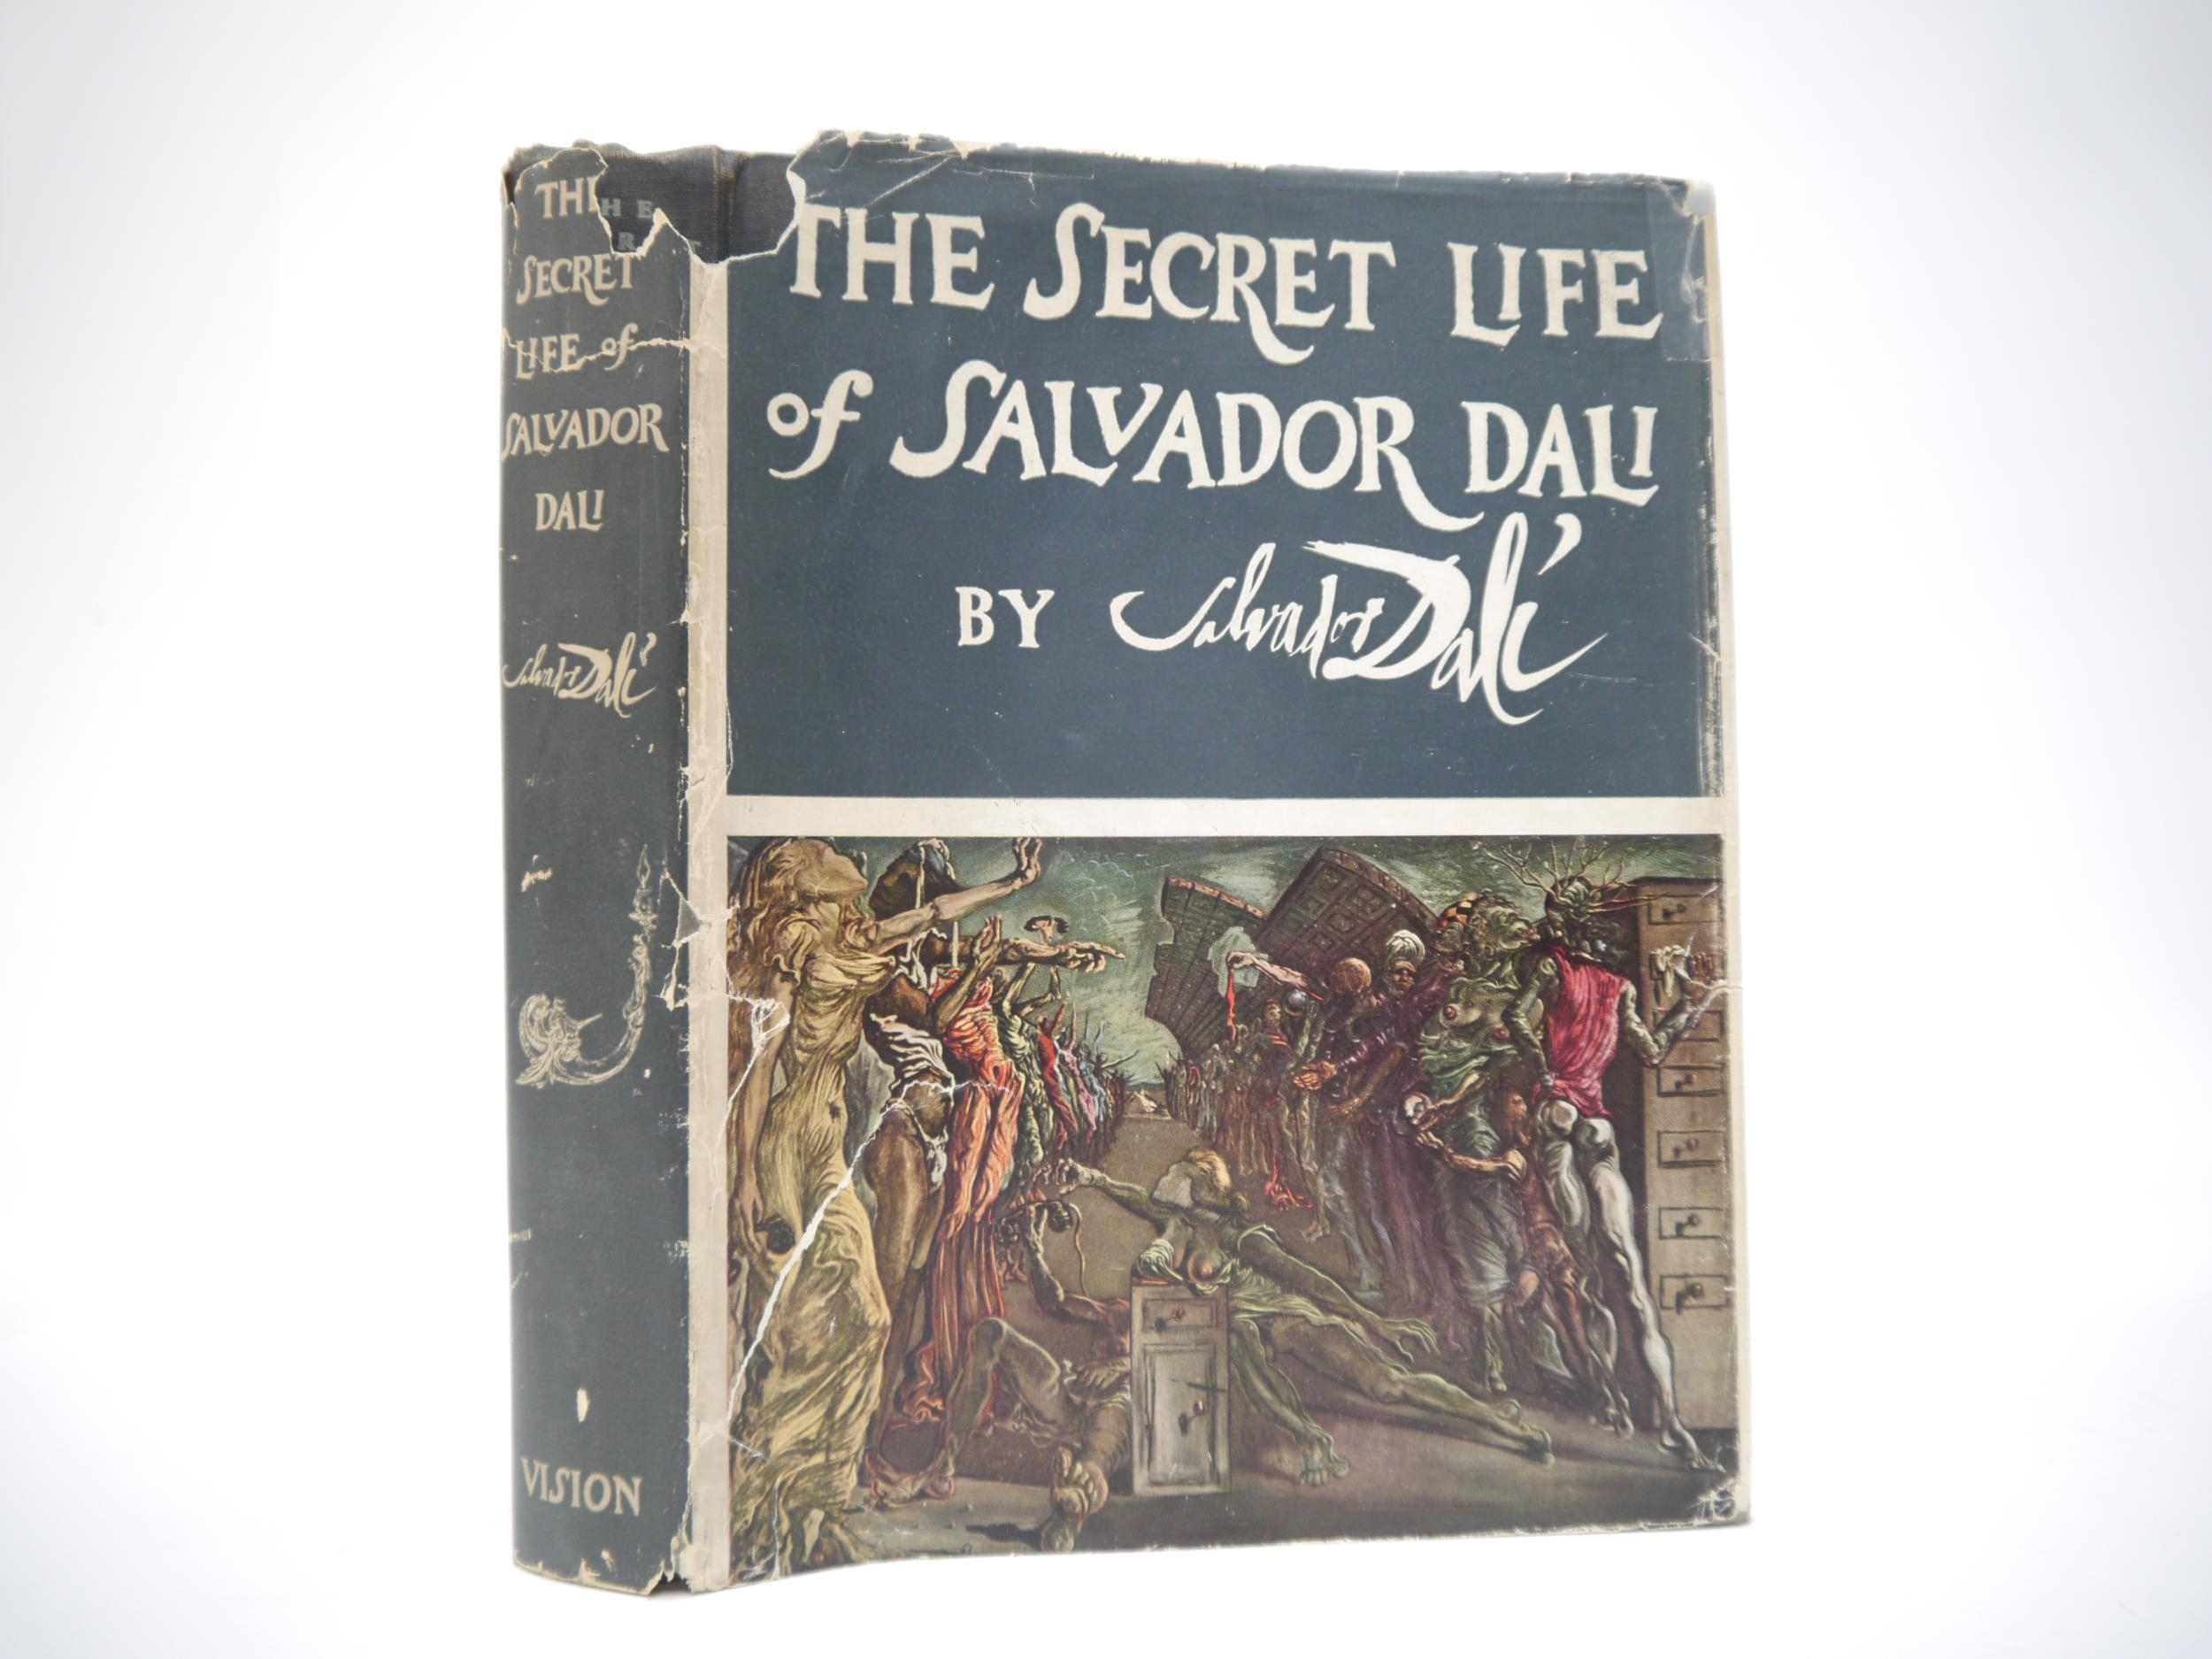 Salvador Dali: 'The Secret Life of Salvador Dali', London, Vision Press, 1948, 1st edition,